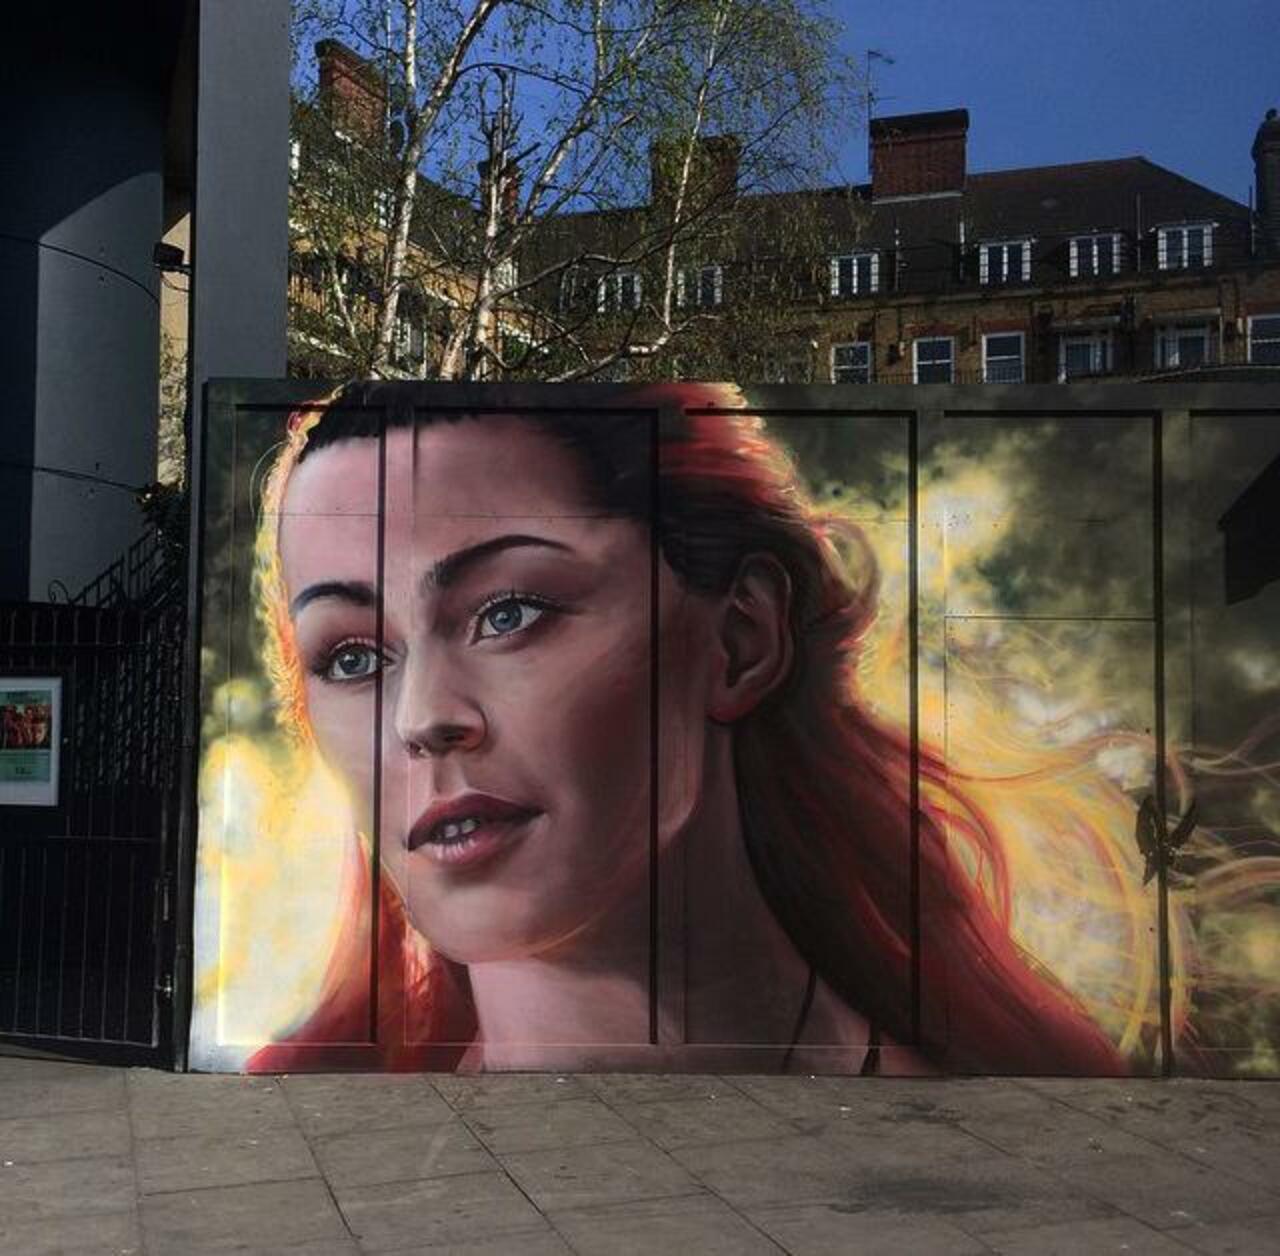 New Street Art portrait by whoamirony in Camden Market, London 

#art #arte #graffiti #streetart http://t.co/Kv5UvsD5tN googlestreetart c…